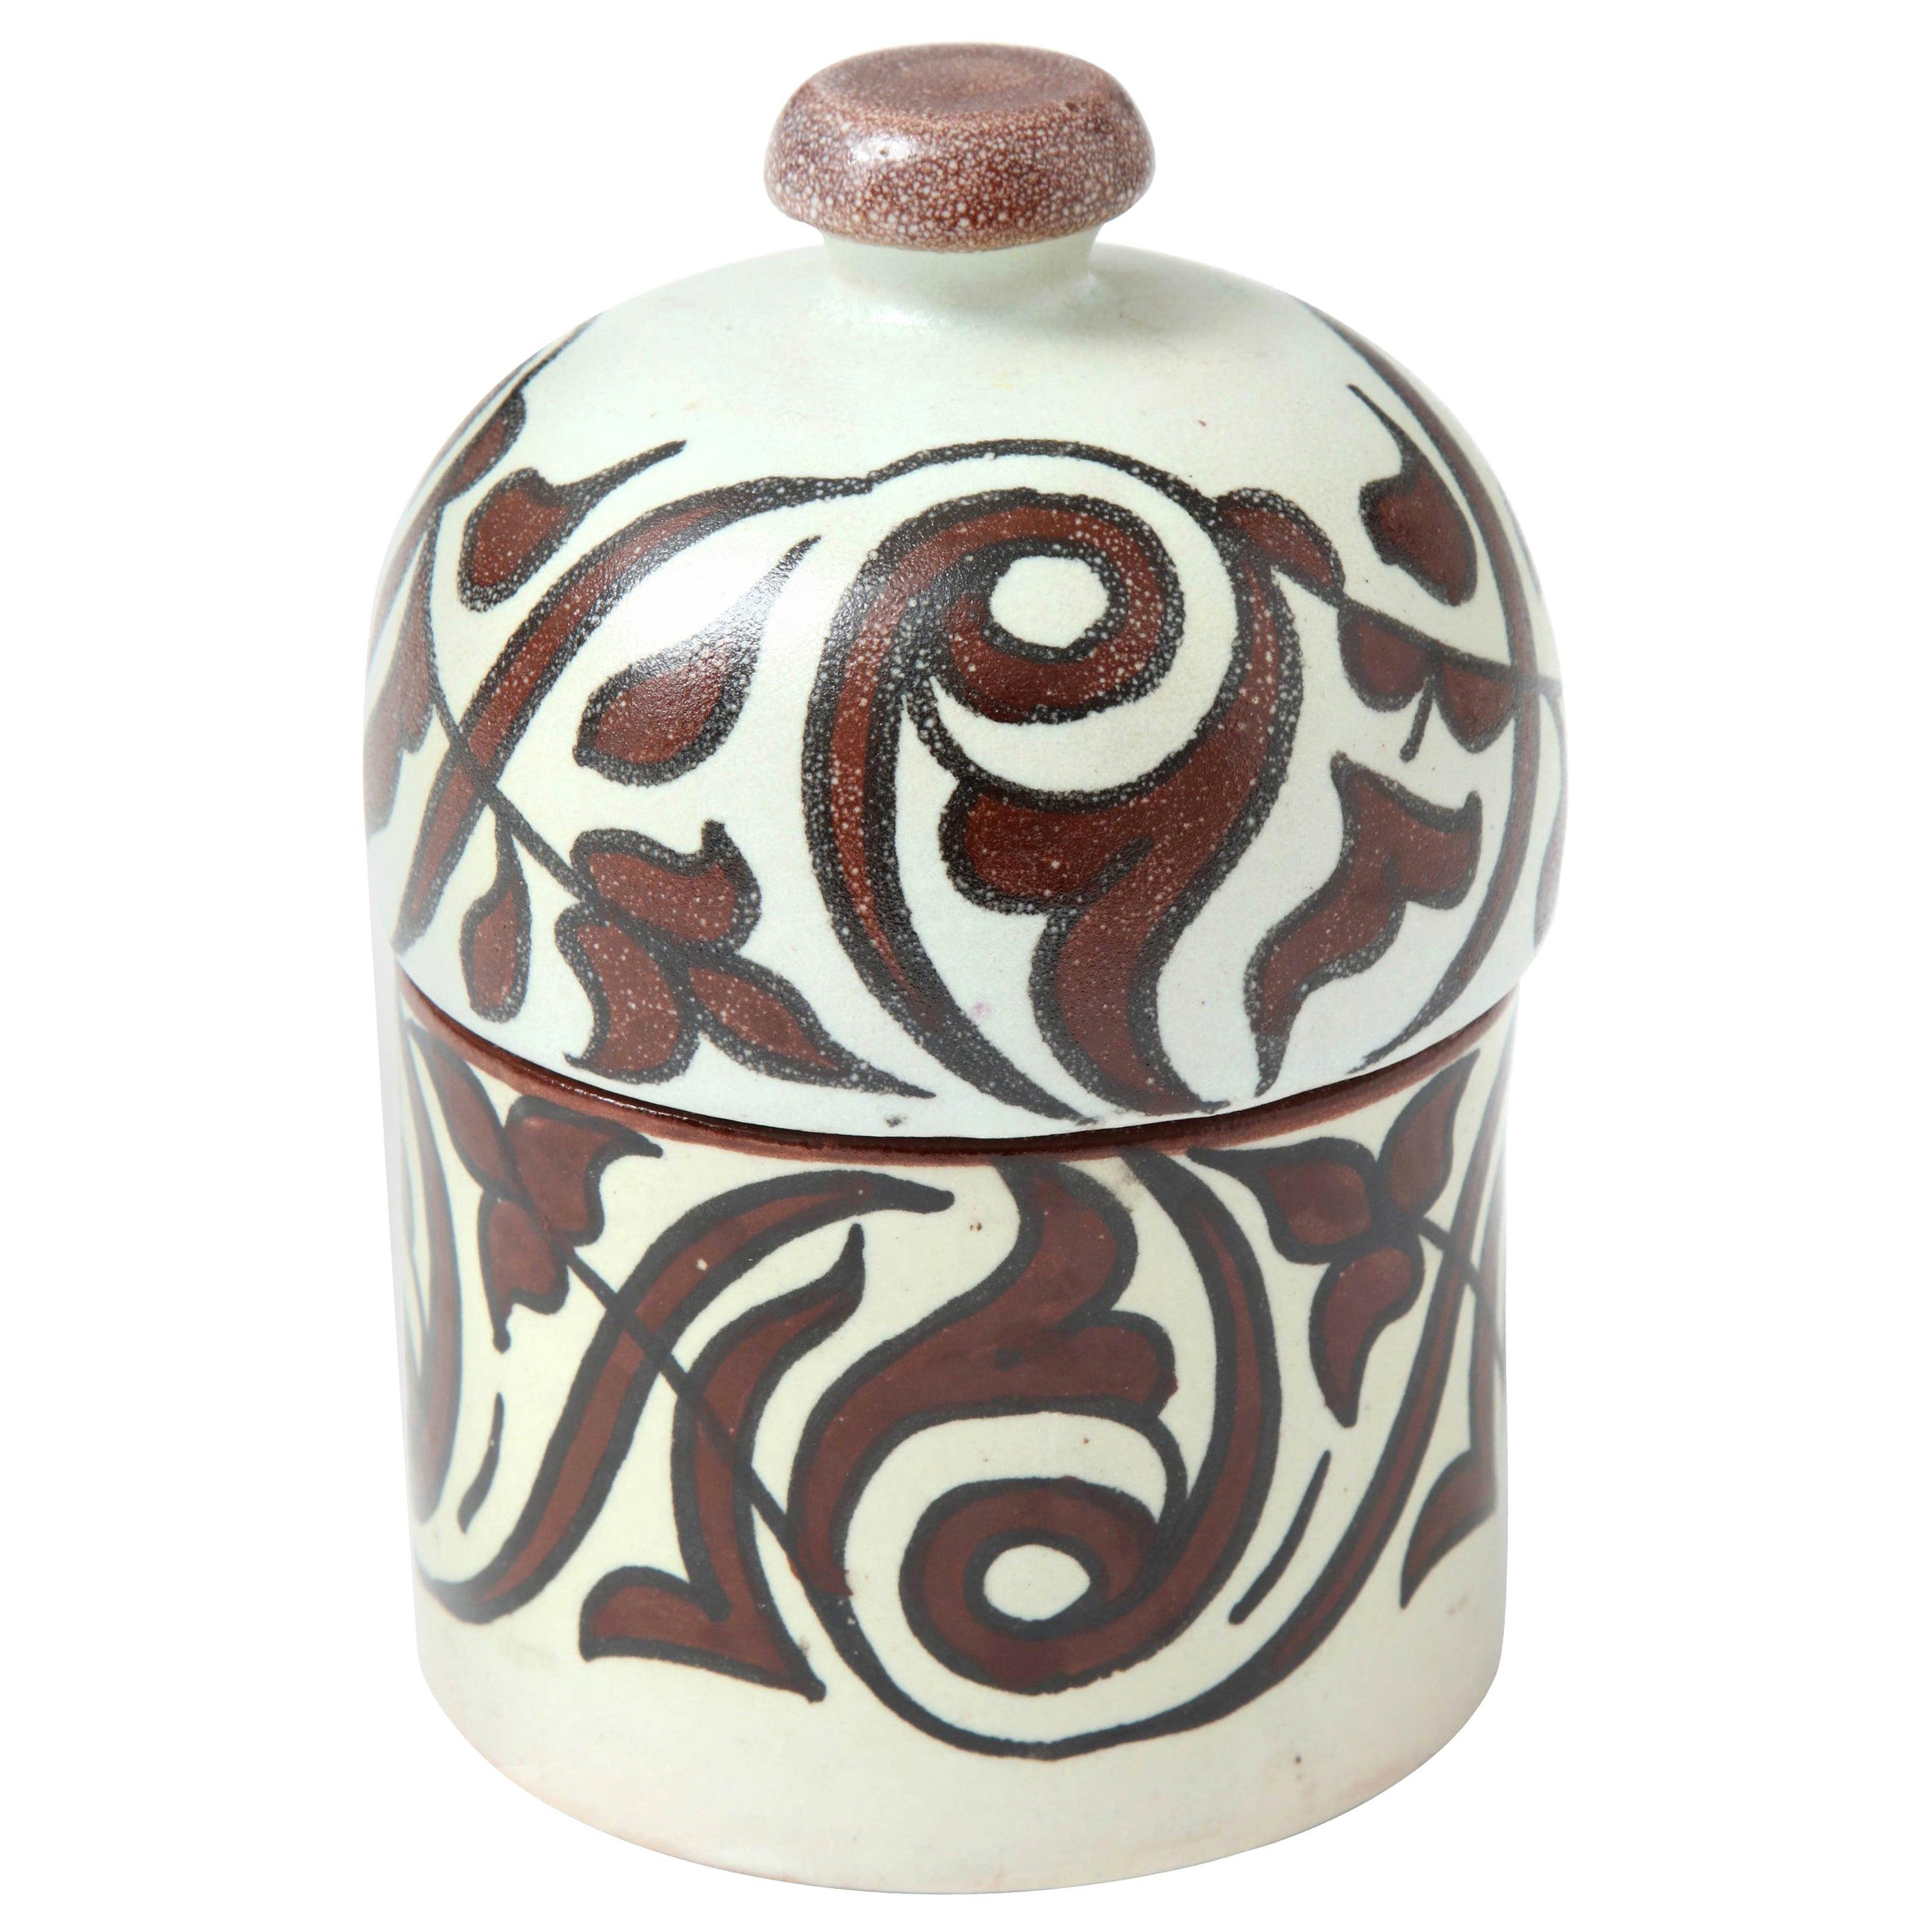 Keramik aus Marokko, Farbe Creme & Burgunder, Handcrafted, Contemporary Ceramic im Angebot